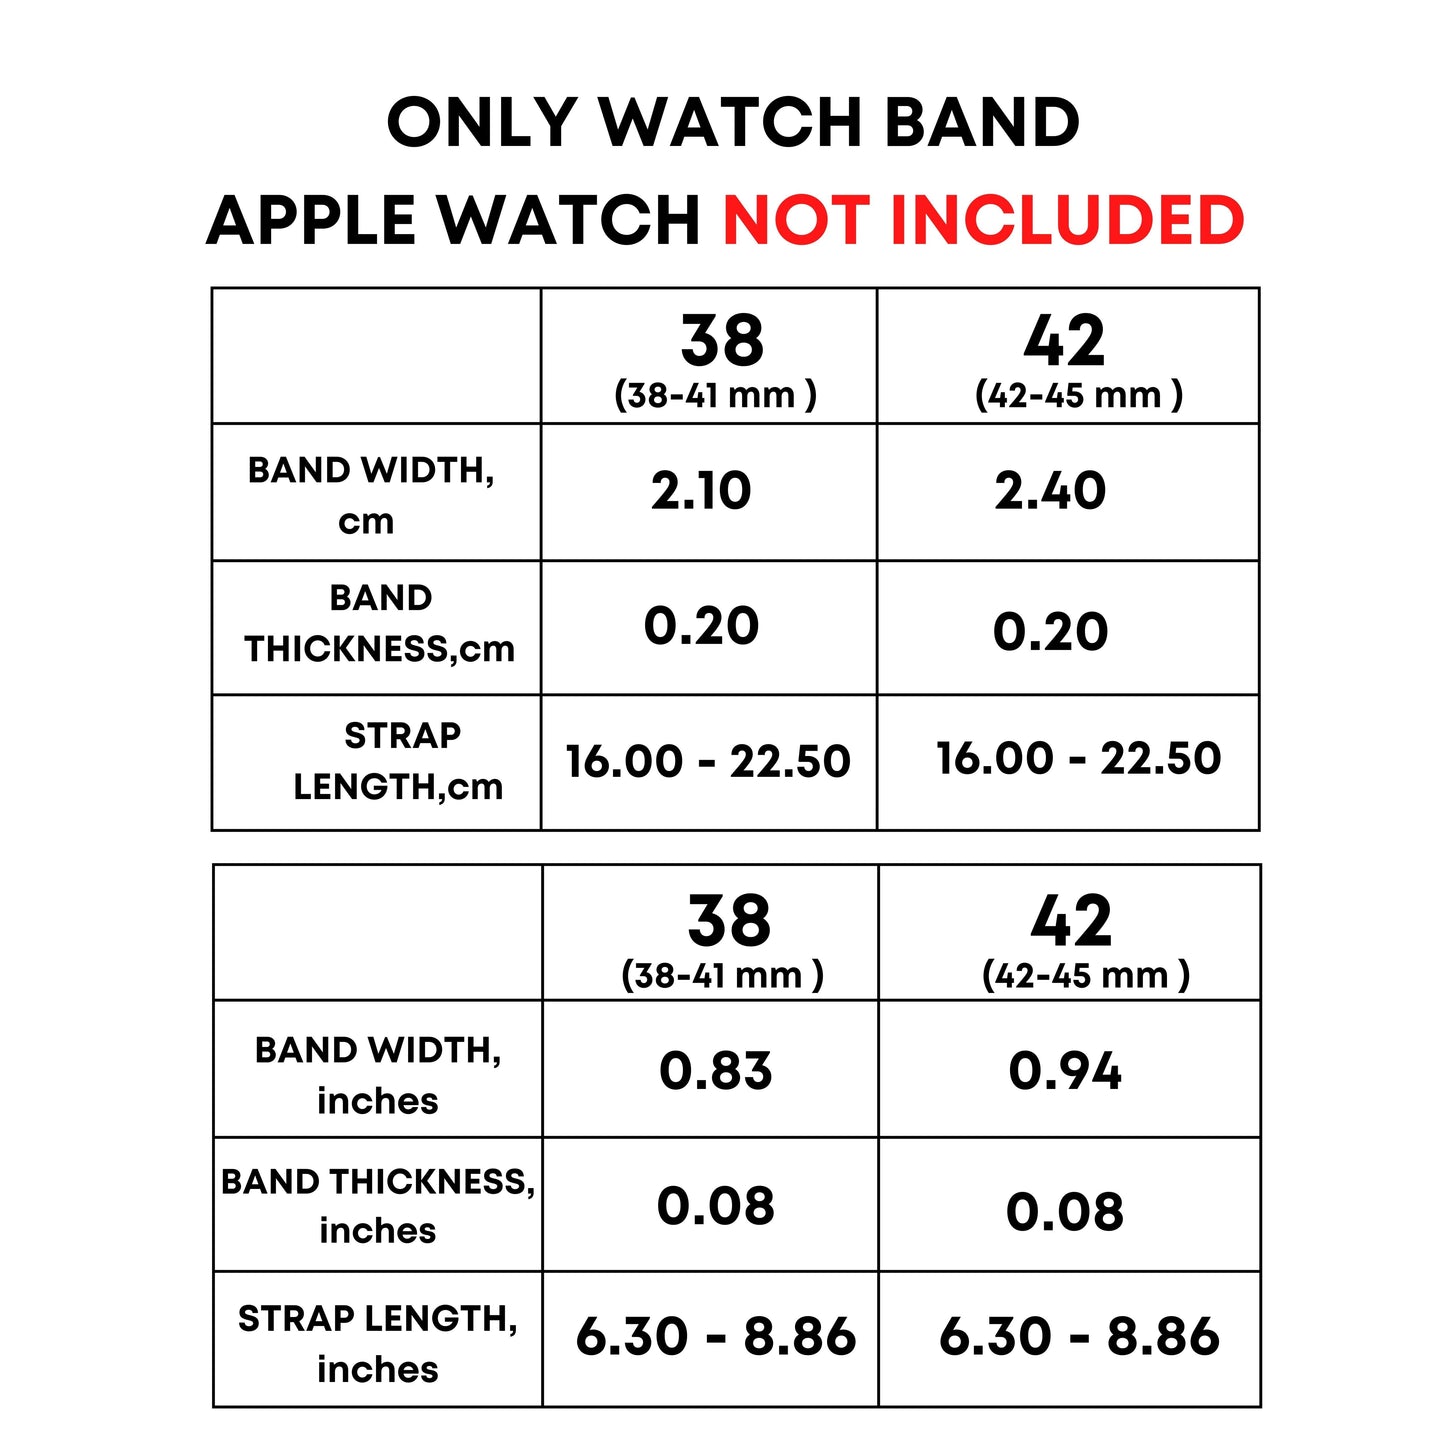 BDSM flag Apple watch band, measurements